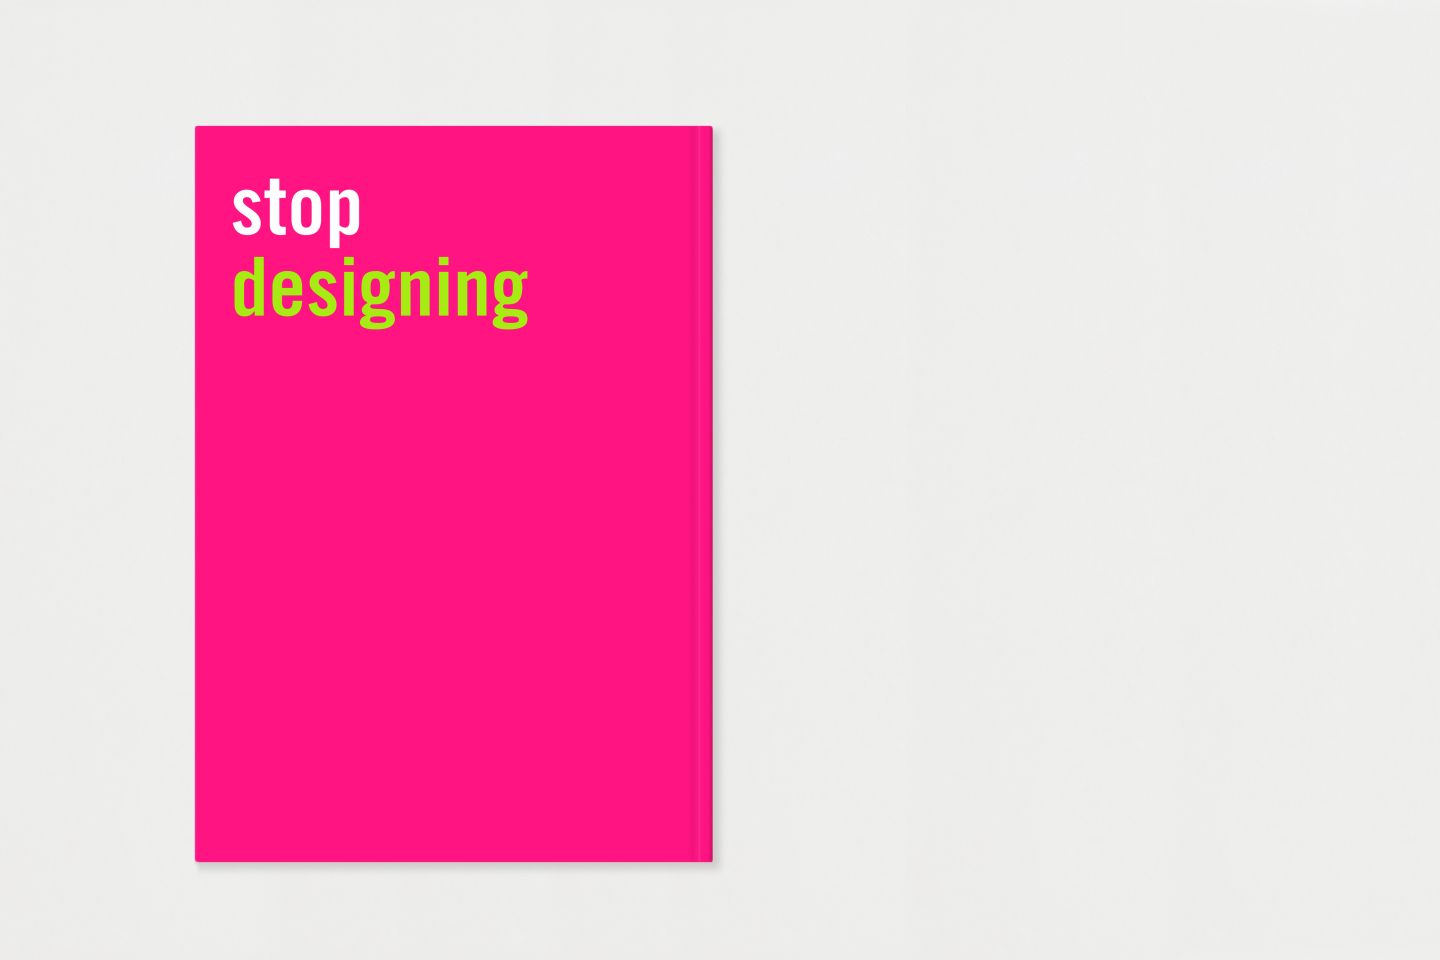 hugo-puttaert-visionandfactory-stop-designing-start-thinking